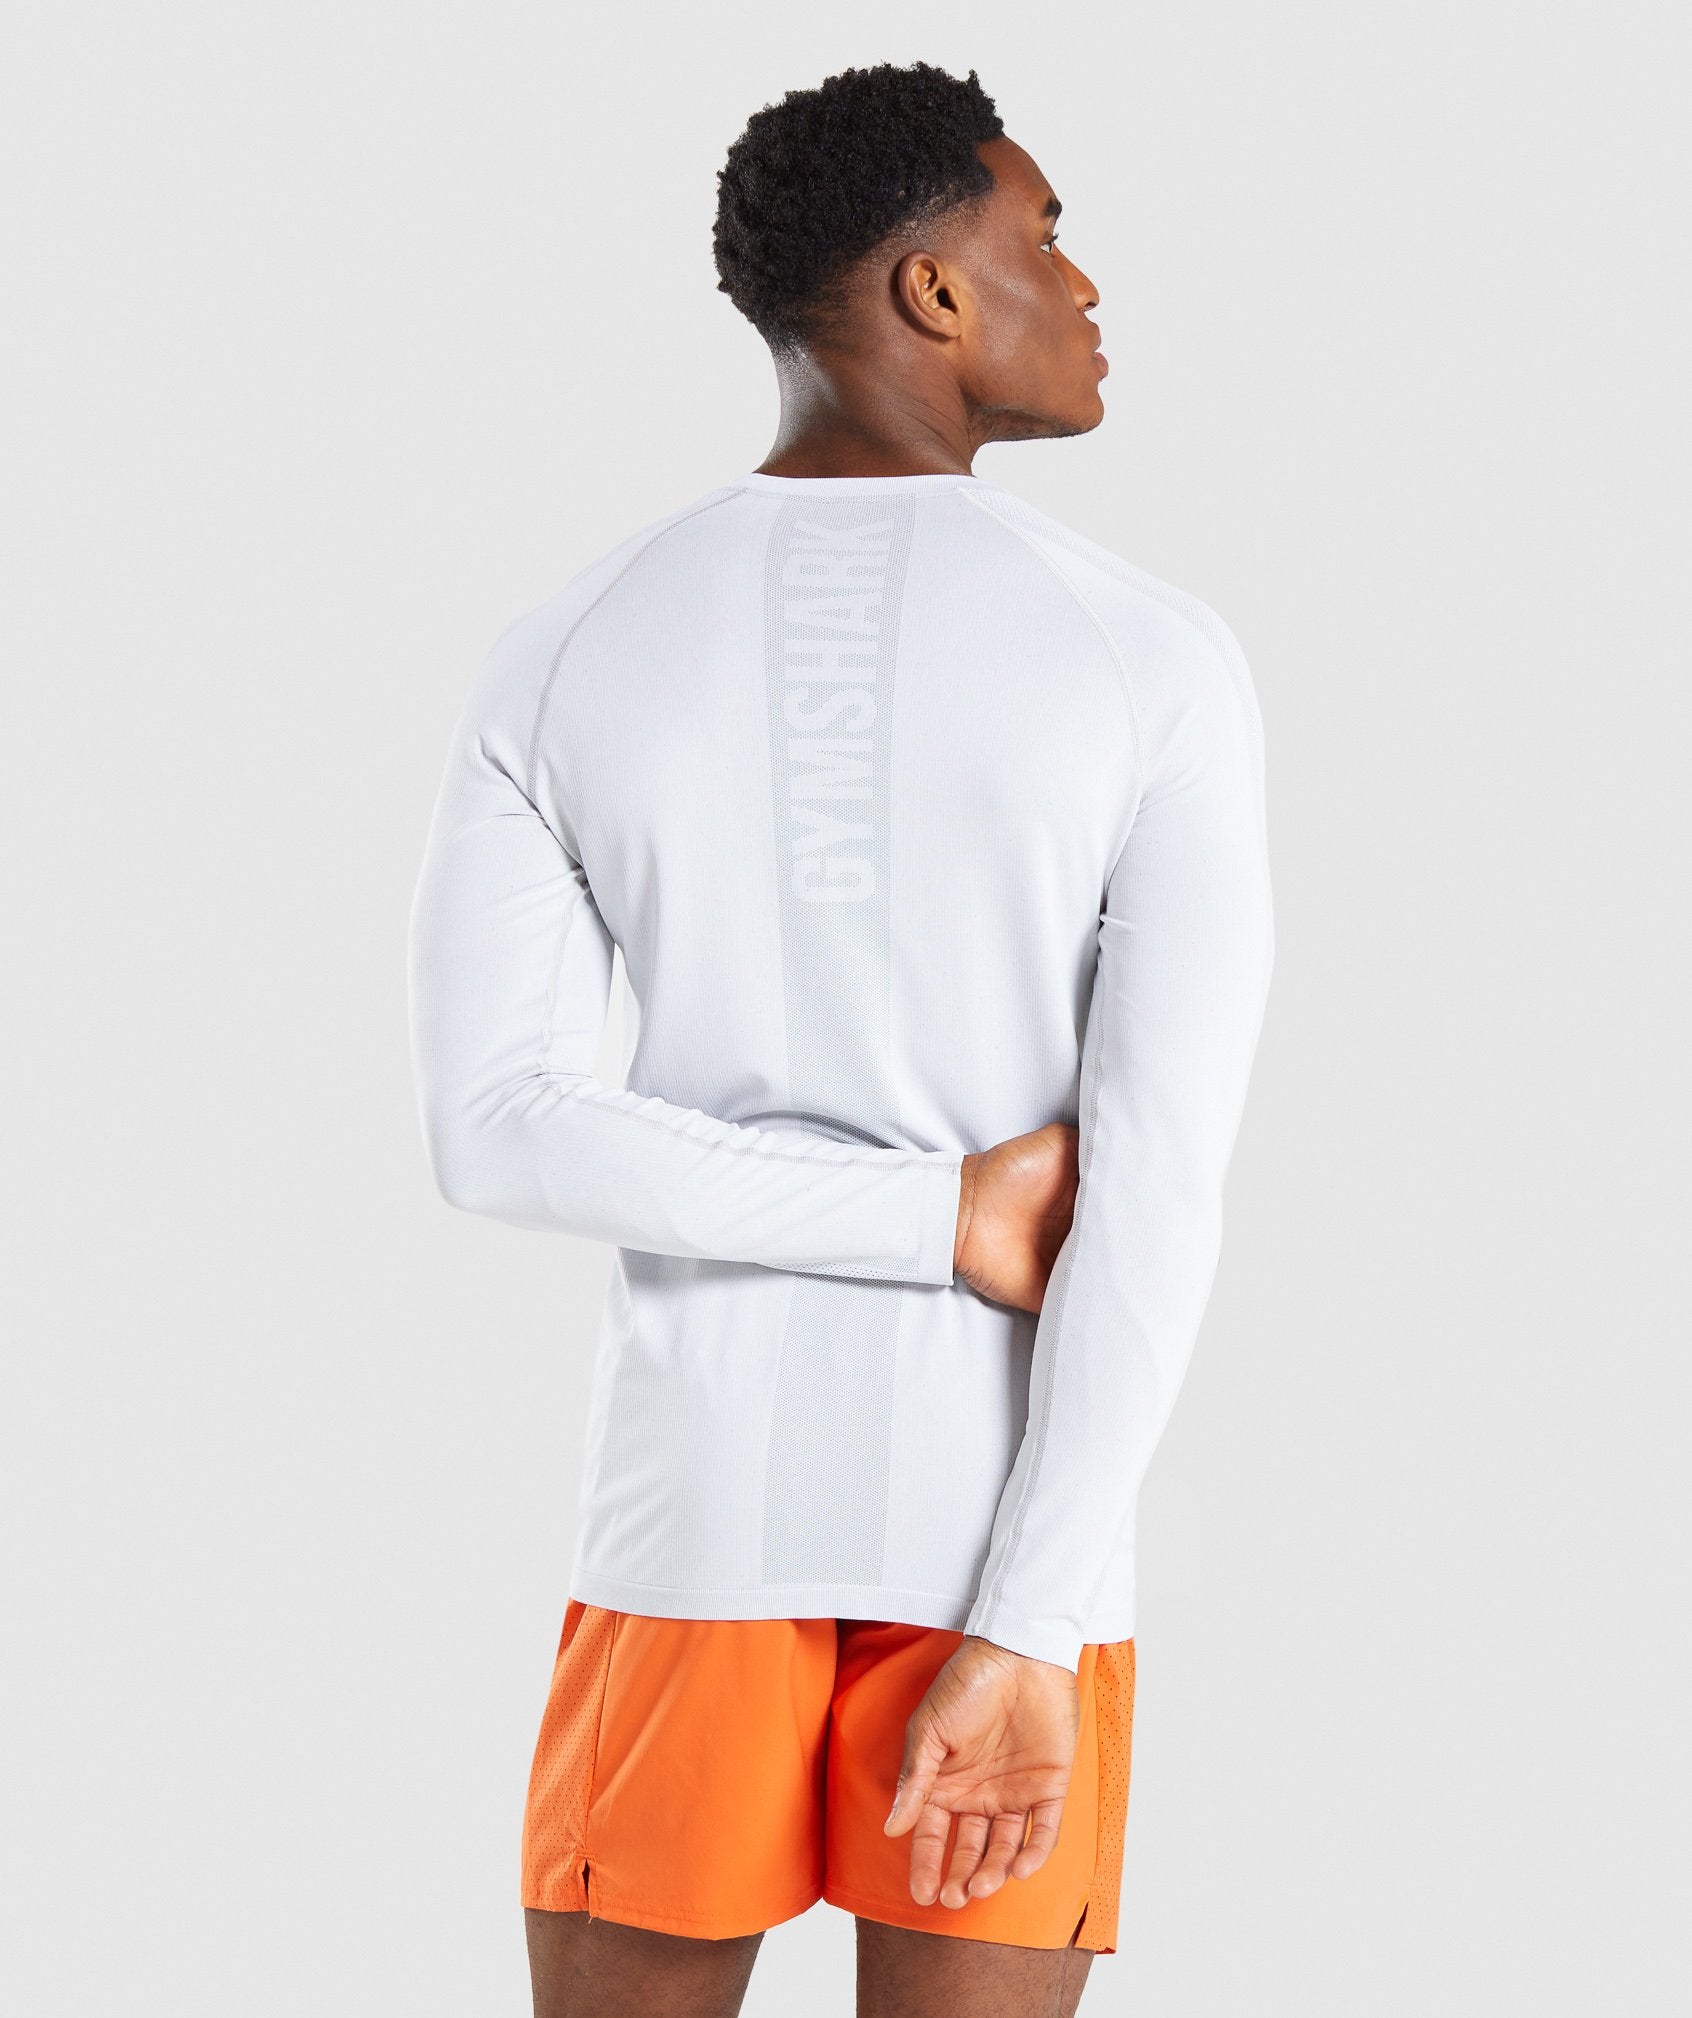 Aspect Lightweight Seamless Long Sleeve T-Shirt in White